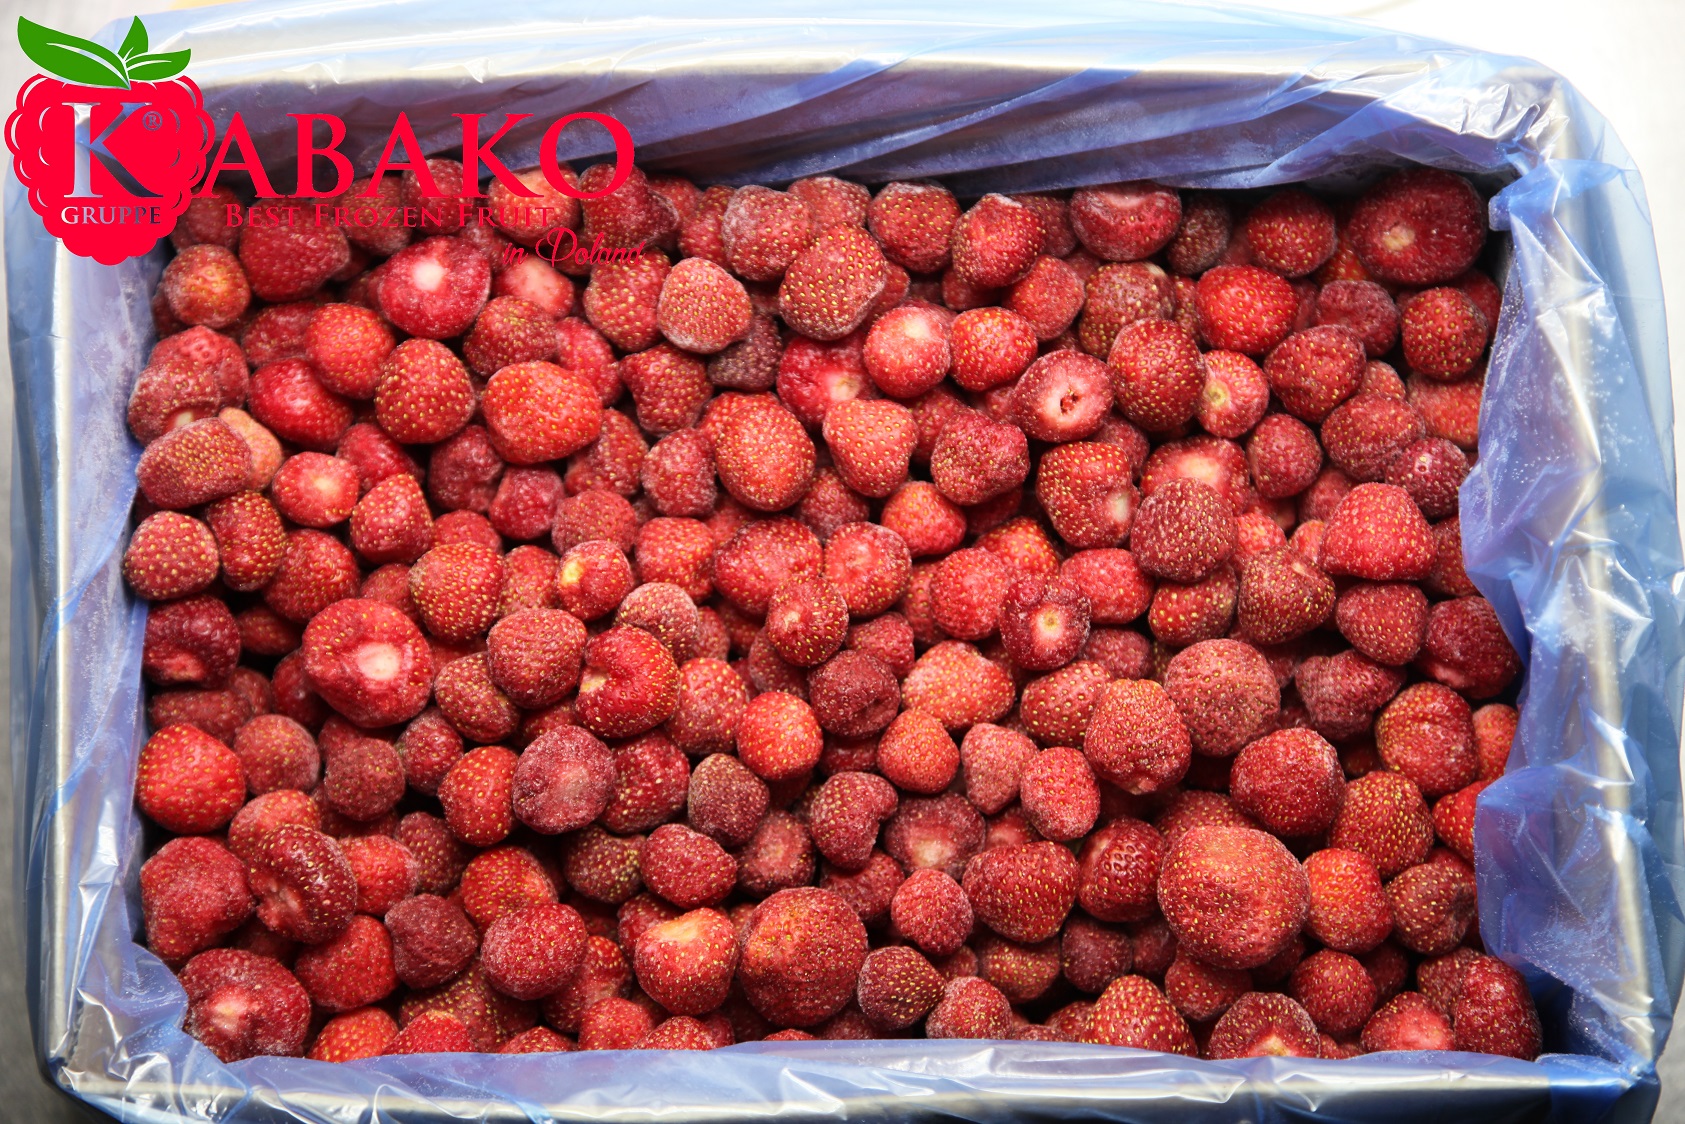 Frozen (IQF) Strawberries 6